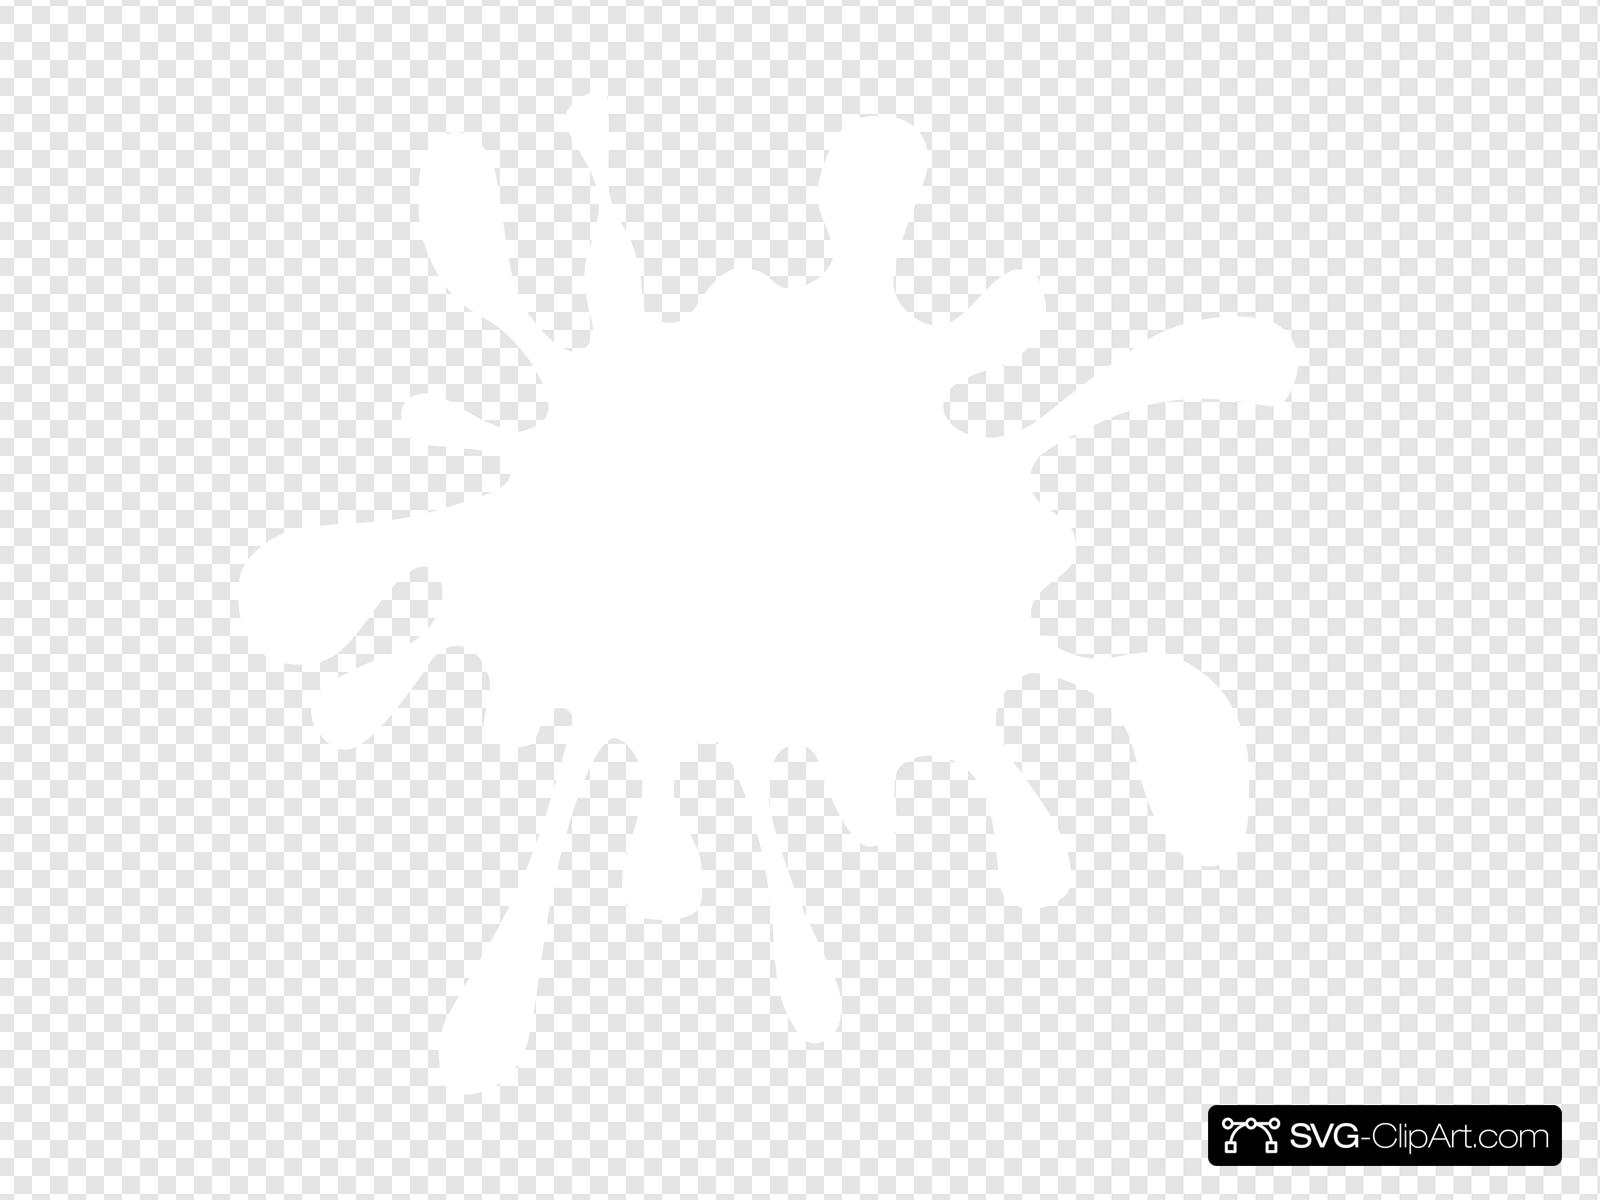 White Splash Clip art, Icon and SVG.